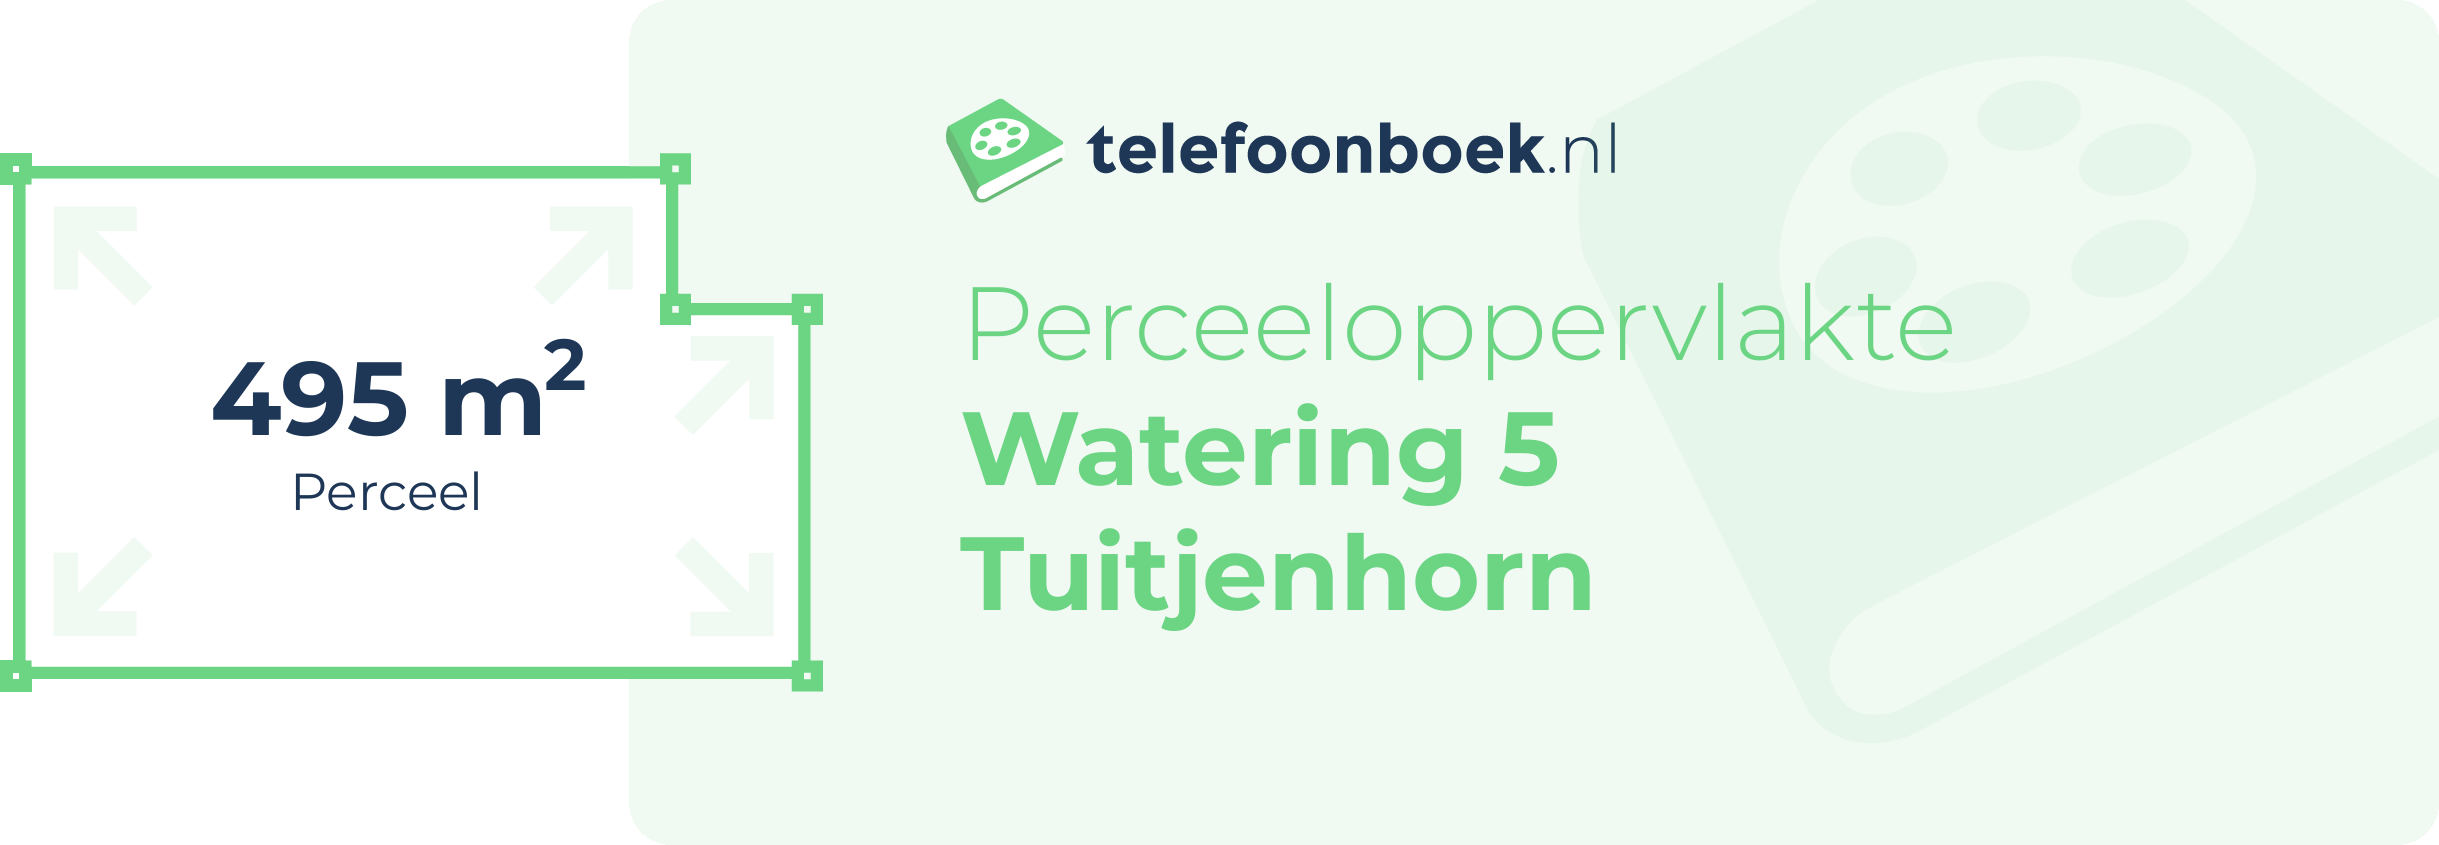 Perceeloppervlakte Watering 5 Tuitjenhorn